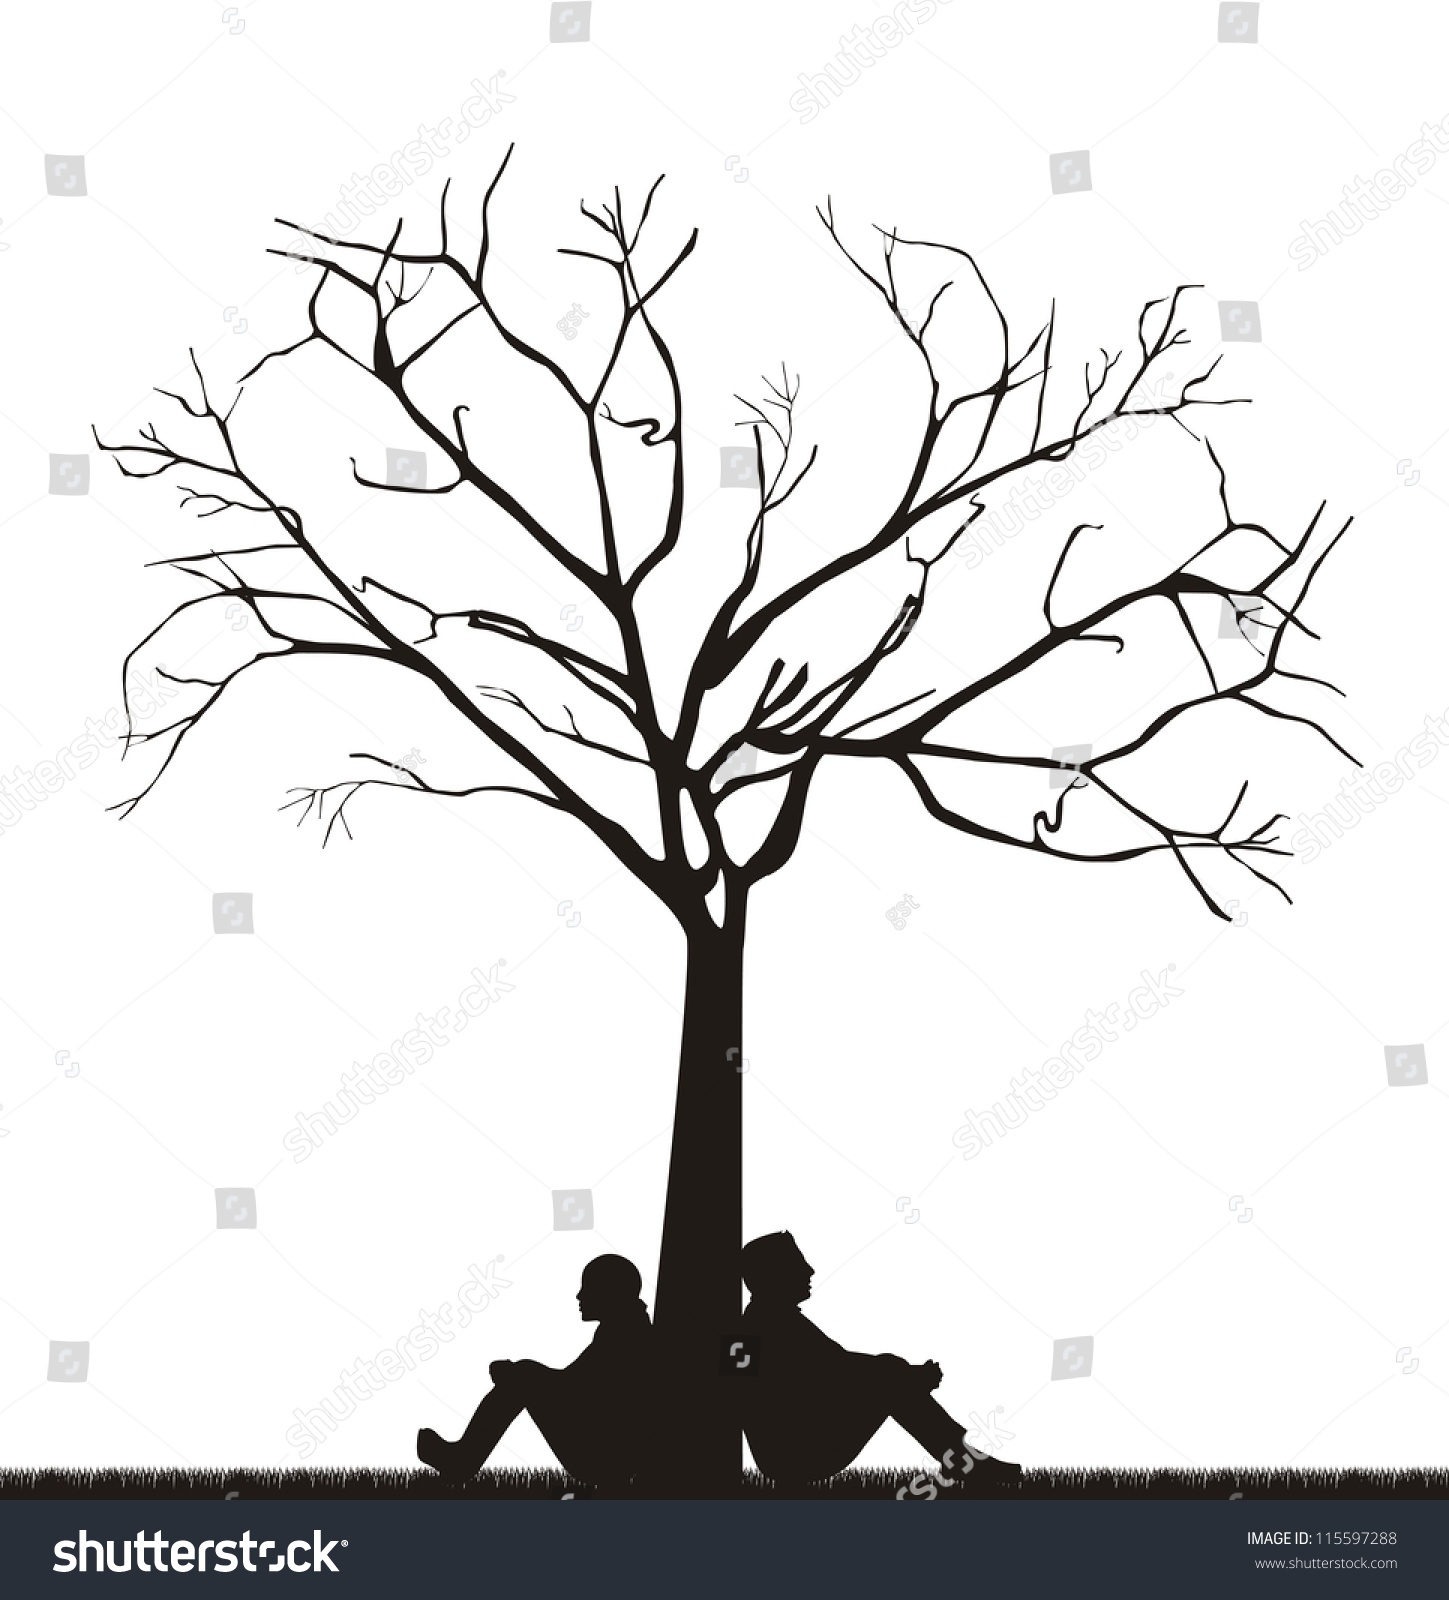 Couple Under Tree Over White Background Vector Illustration 115597288 Shutterstock